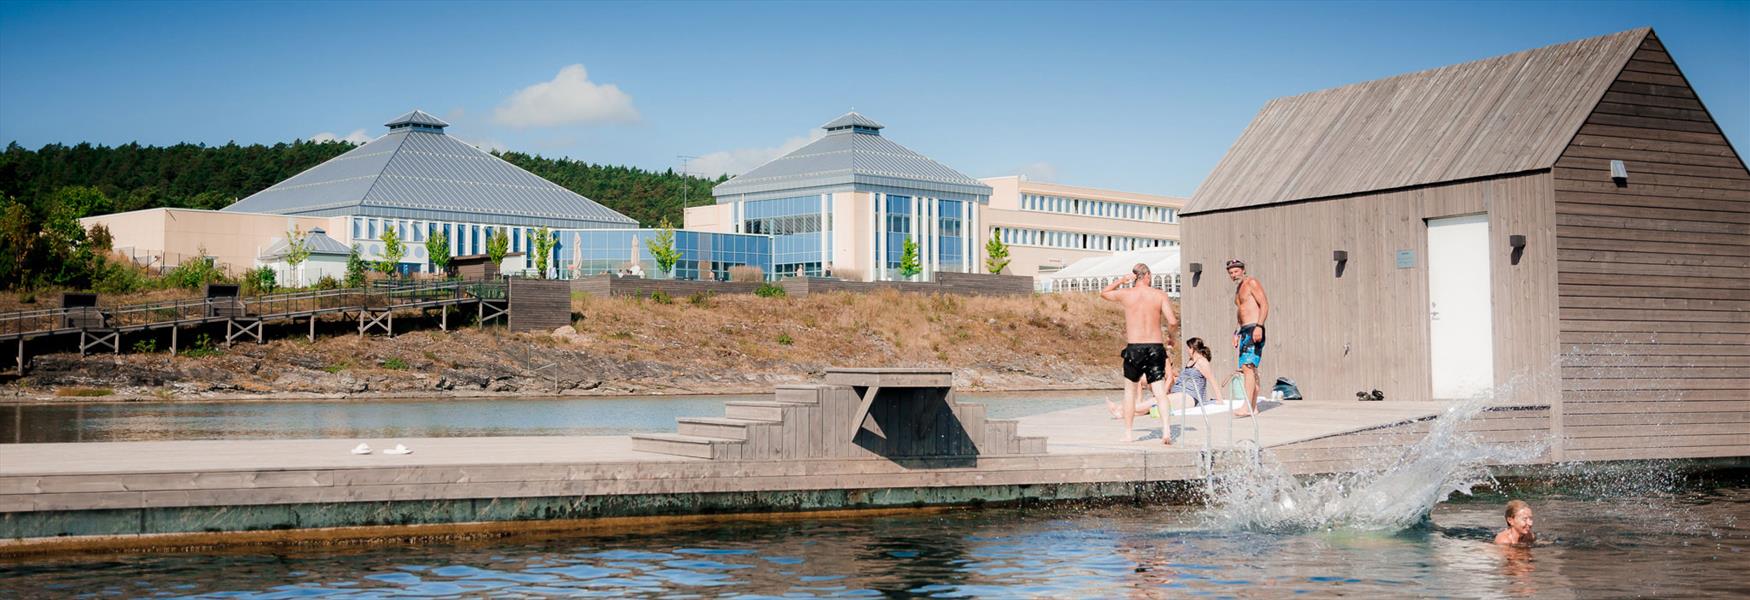 bathing jetty at Quality Hotel Skjærgården in Langesund